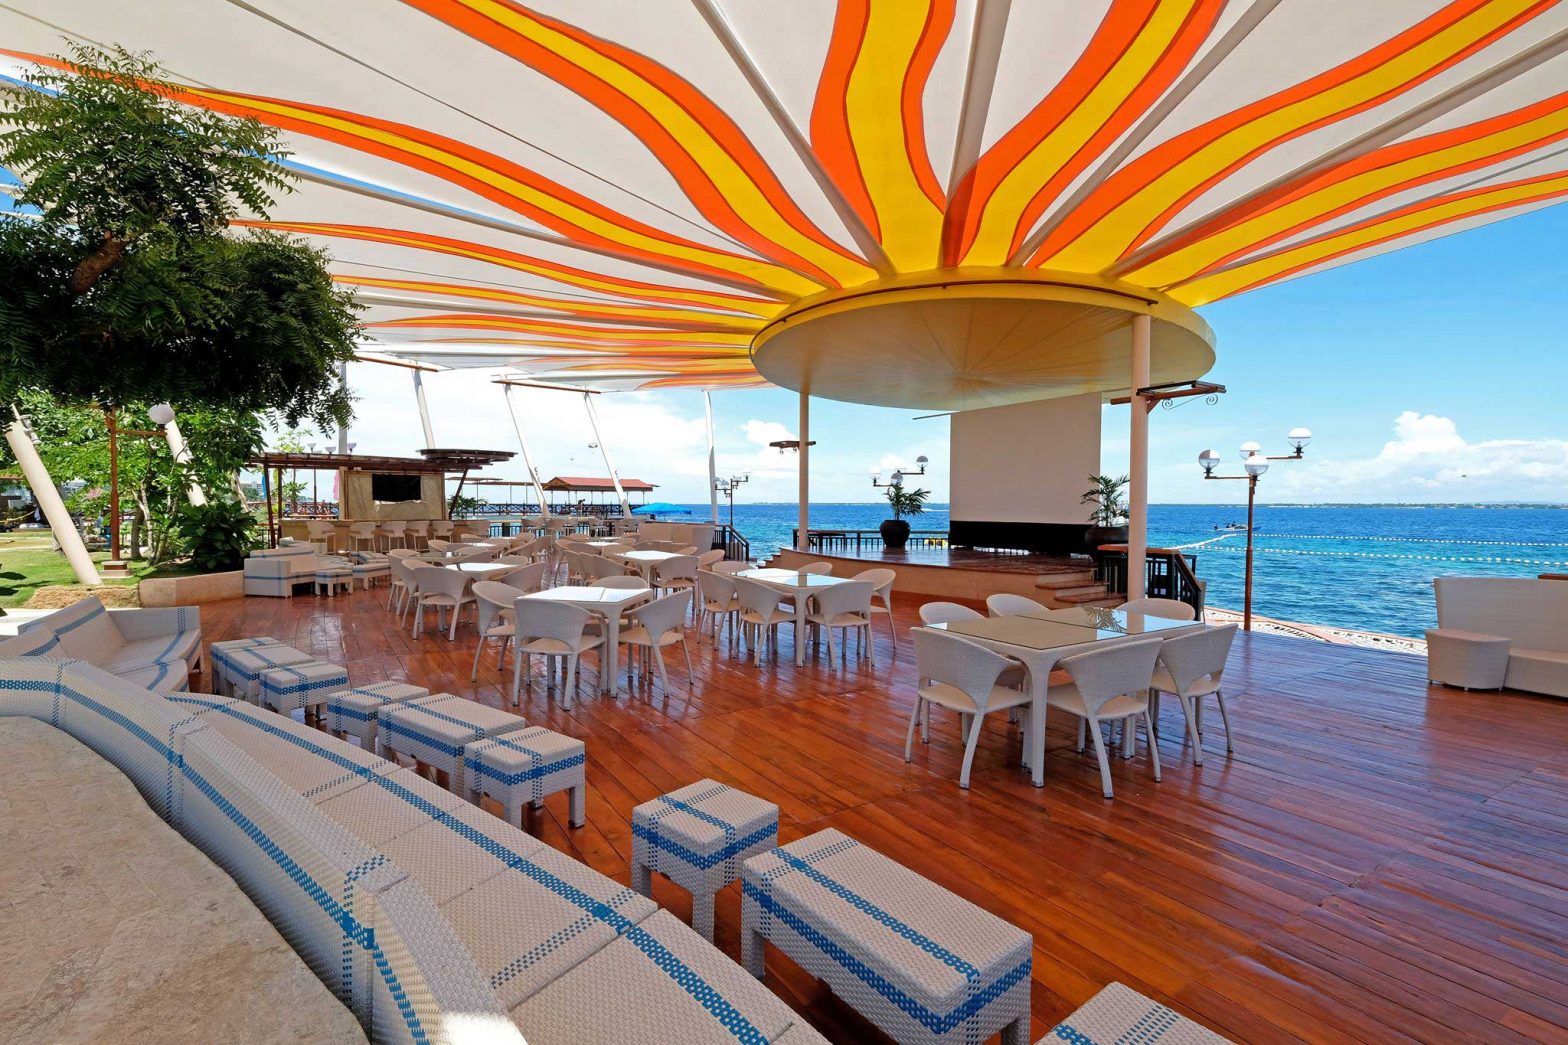 Jpark presents beach fun, yacht cruise, top DJs in Havana by the Sea party